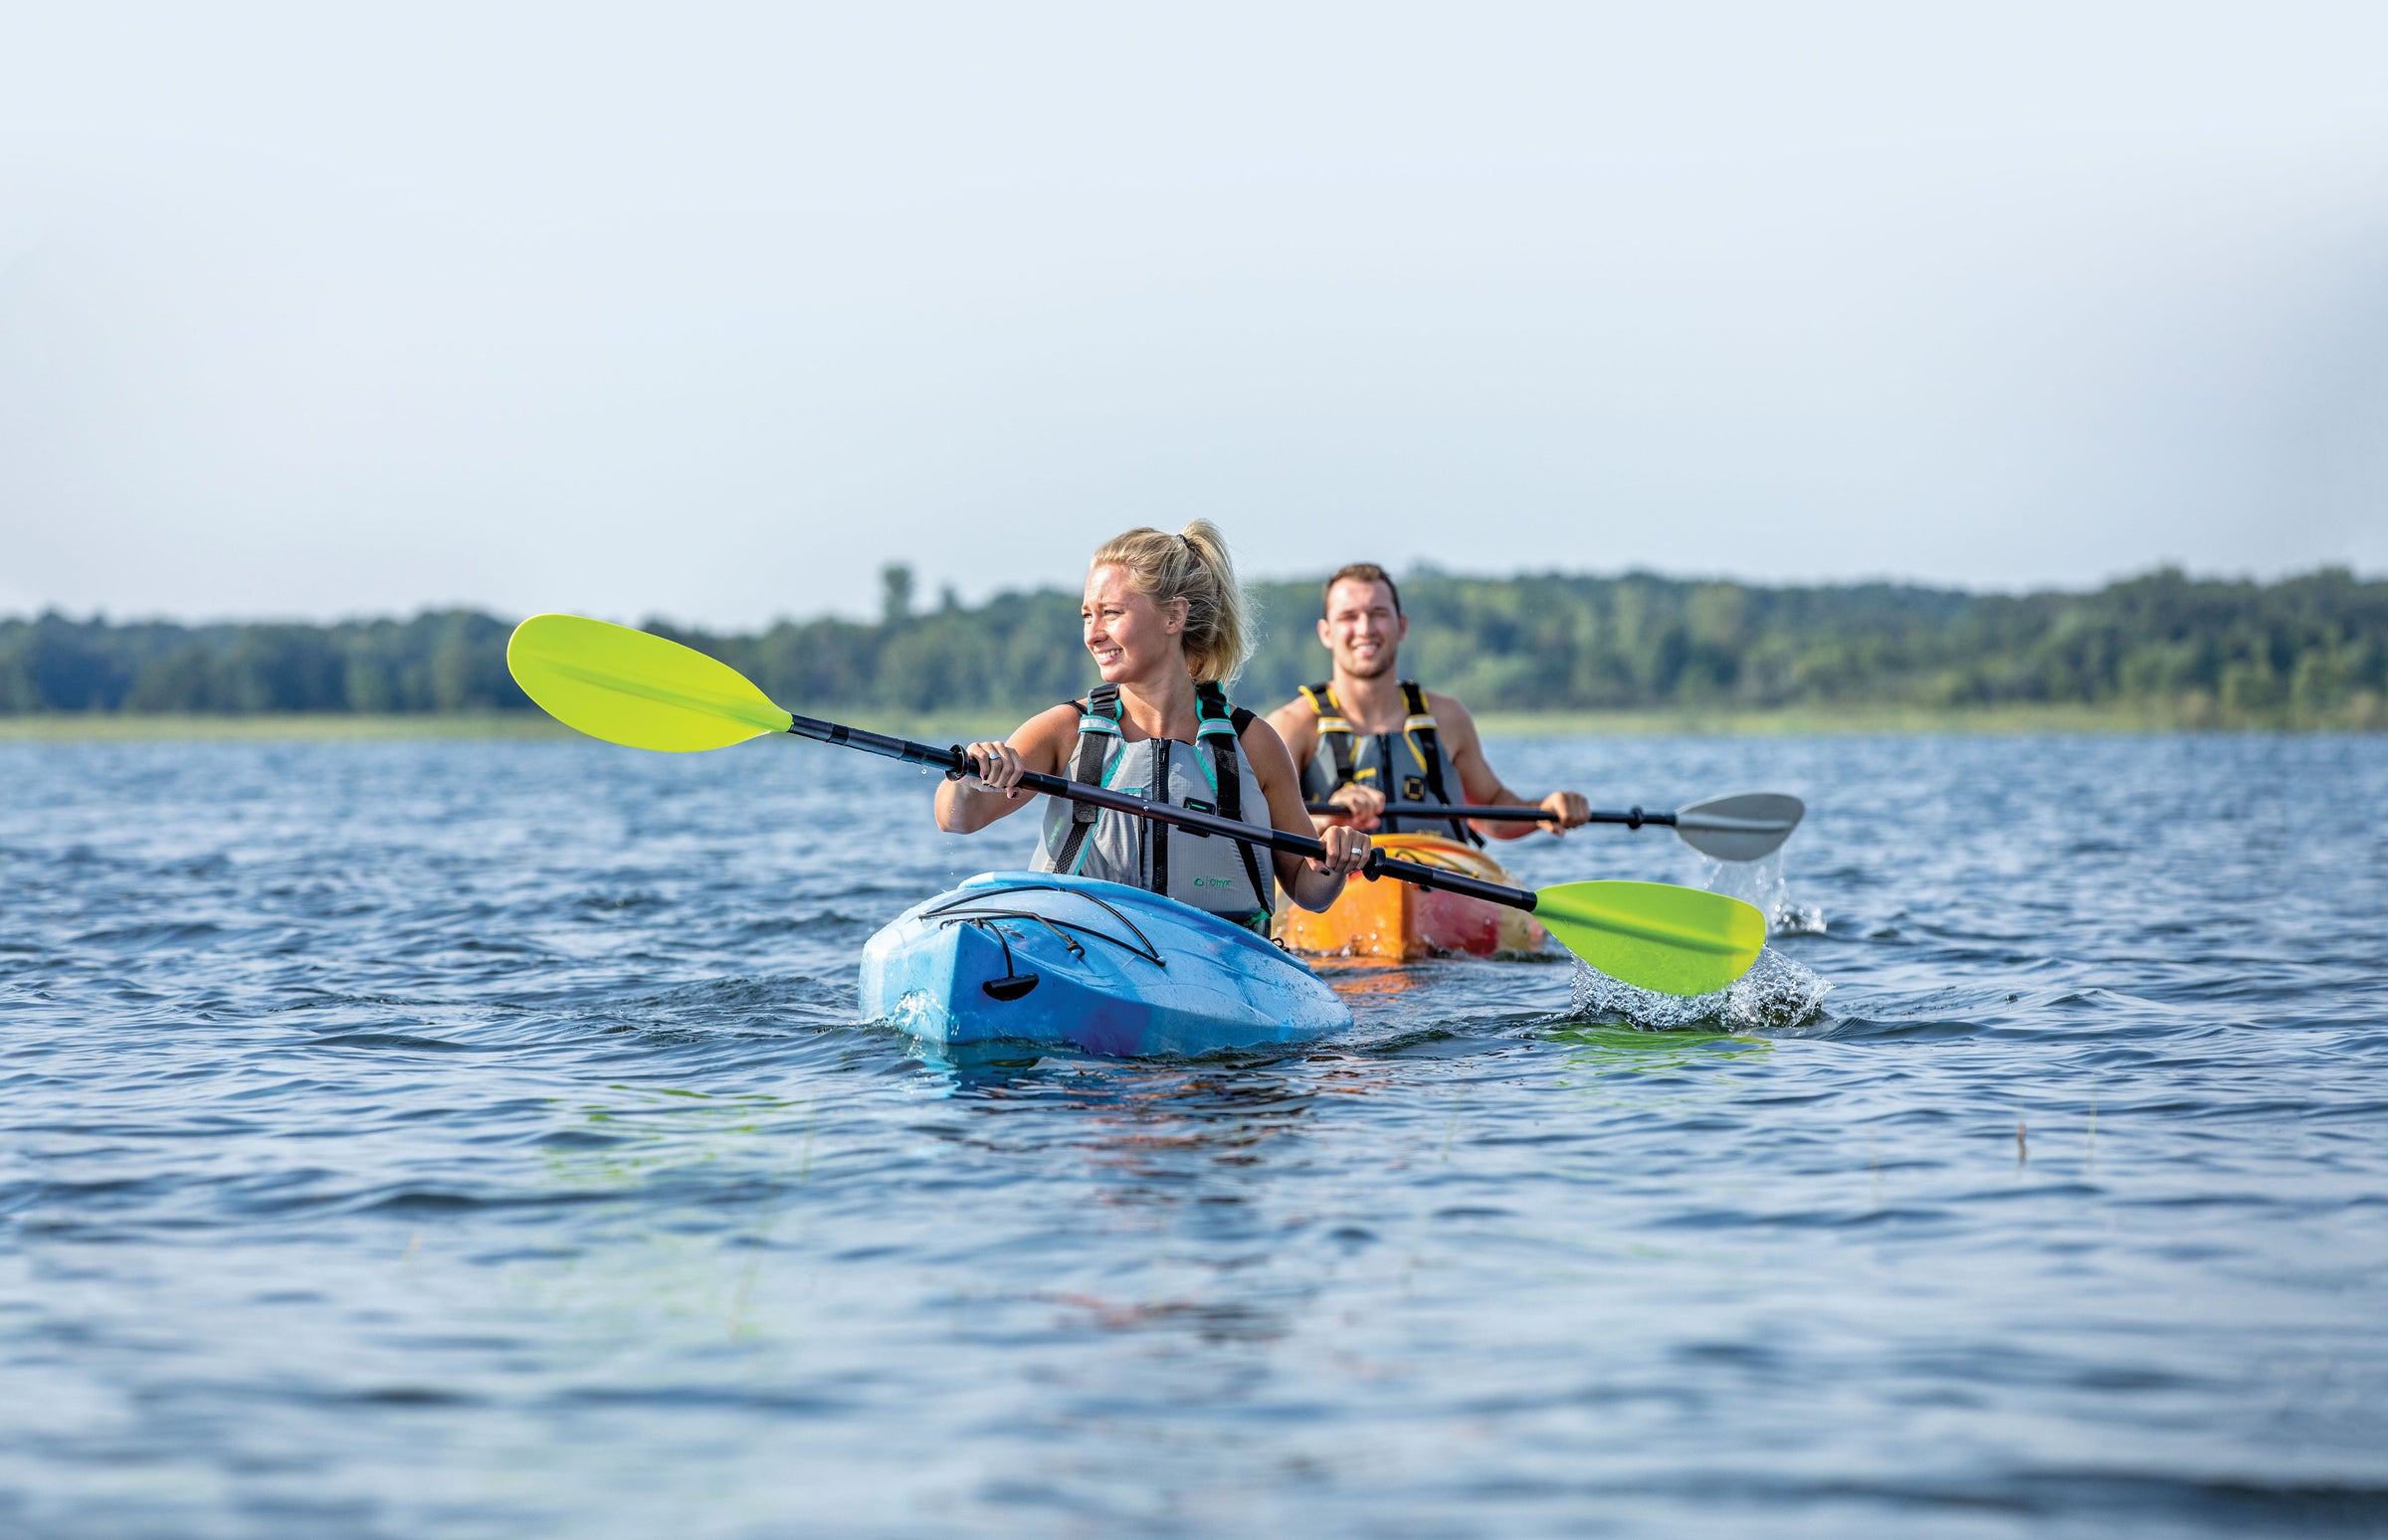 Kayaking & Fishing Accessories - Paddles & PFD's - Life Jackets - Pack &  Paddle